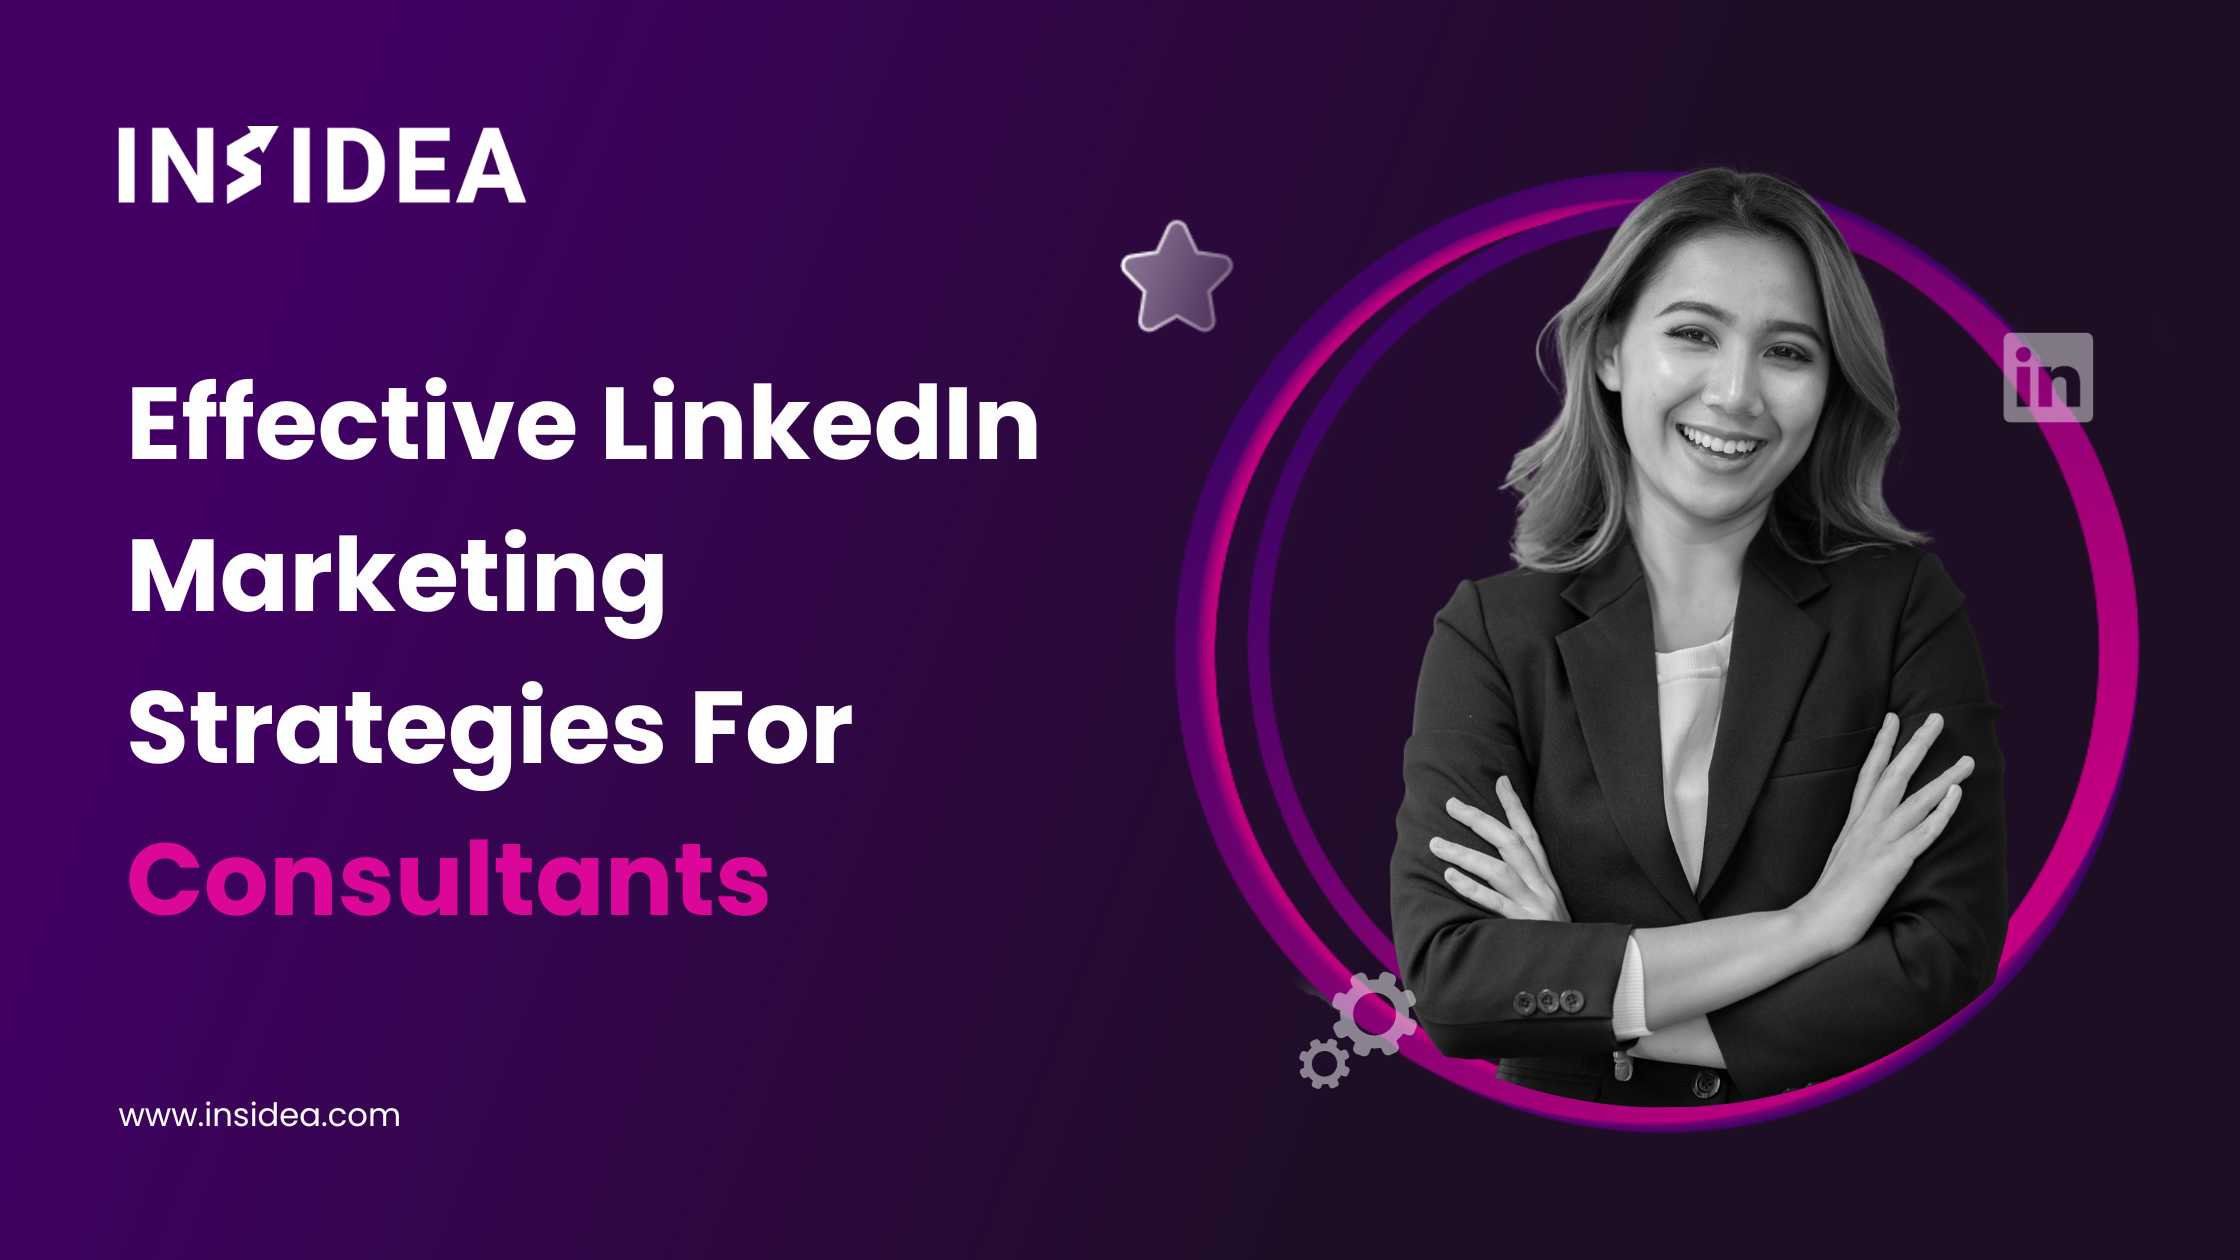 _Effective LinkedIn Marketing Strategies For Consultants